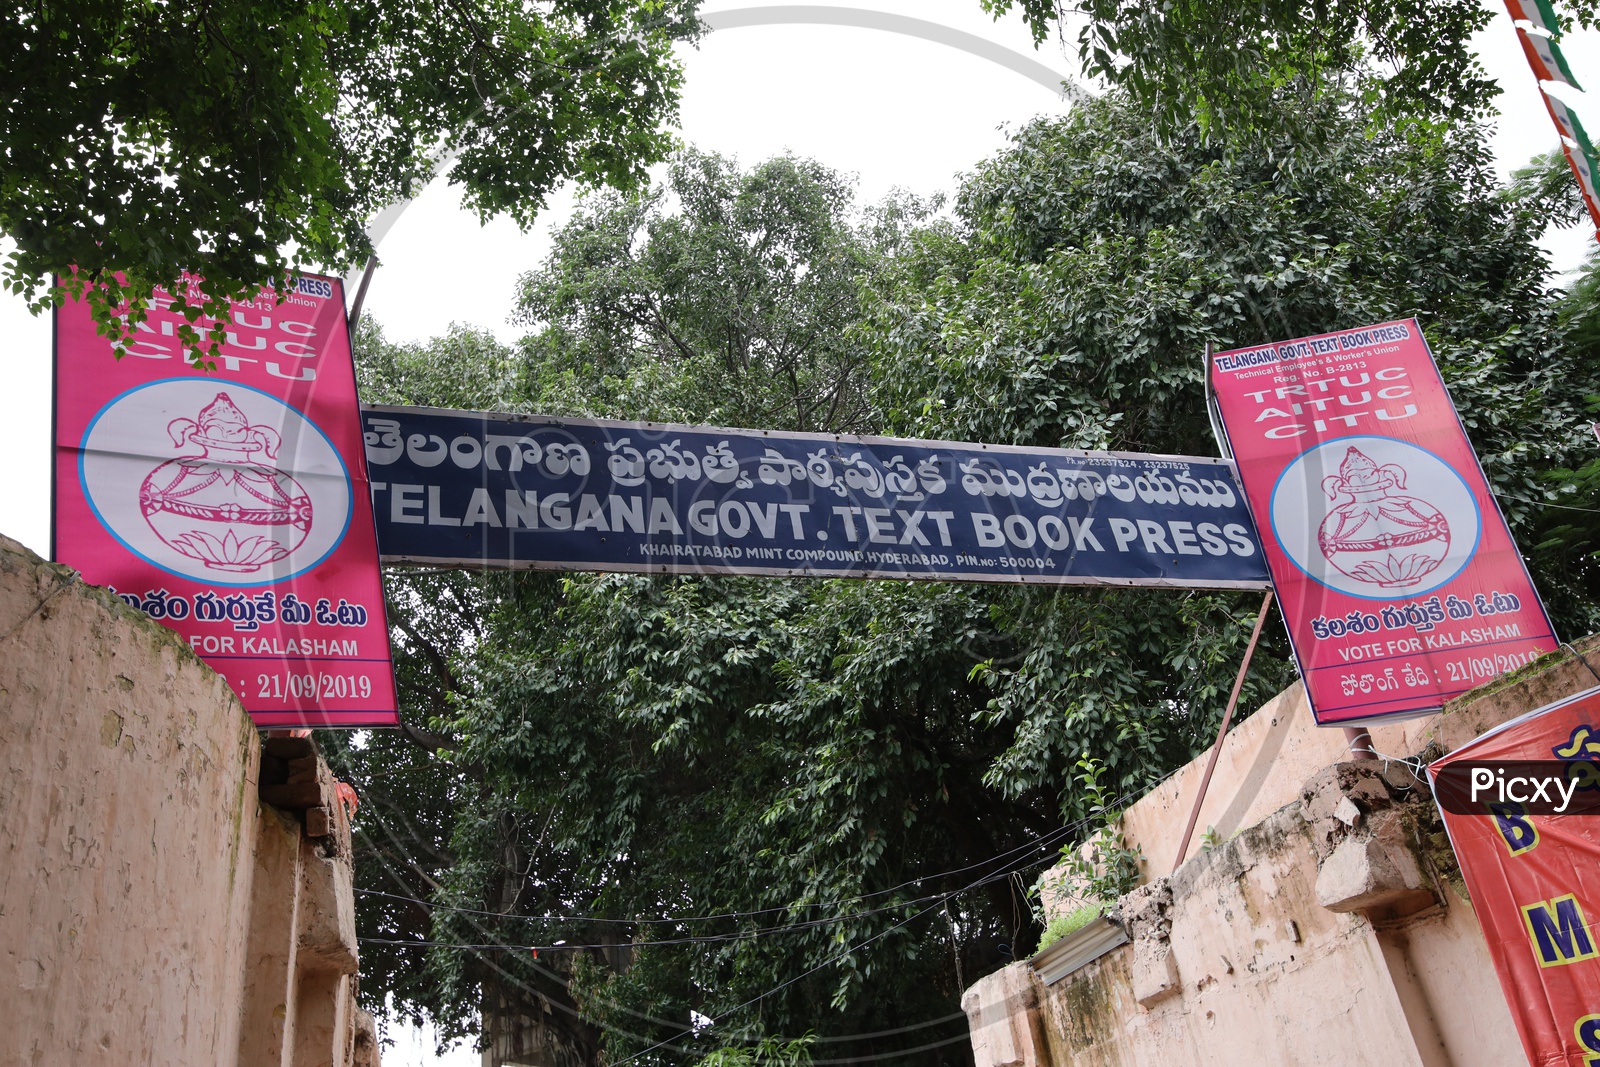 Telangana Govt text book Press  Main Entrance